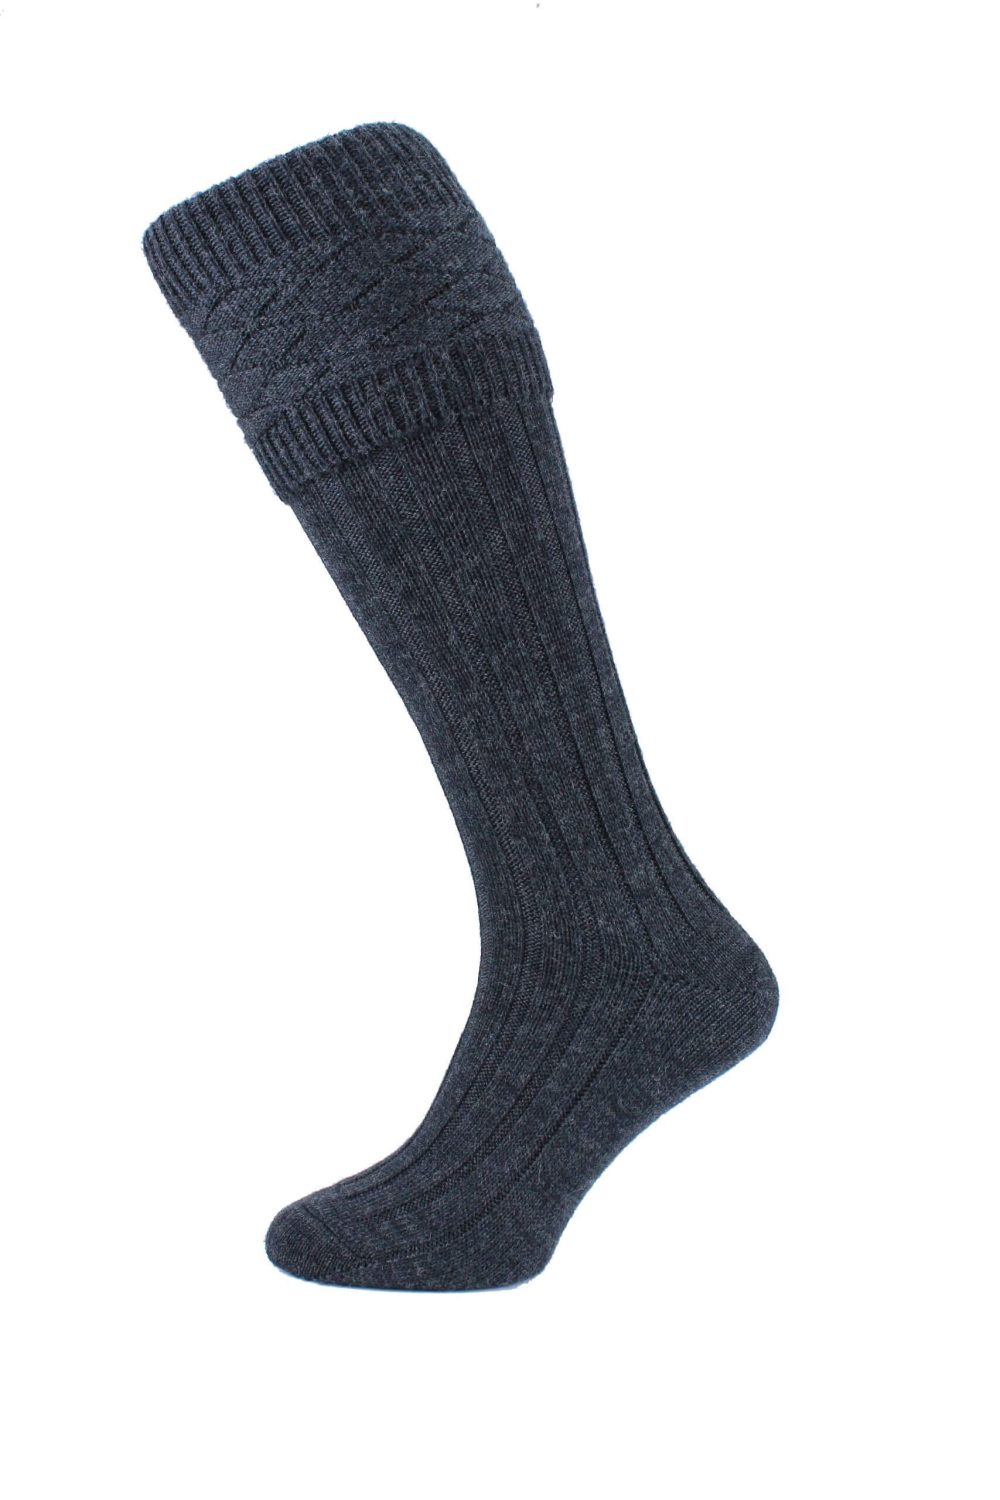 Charcoal Kilt Socks